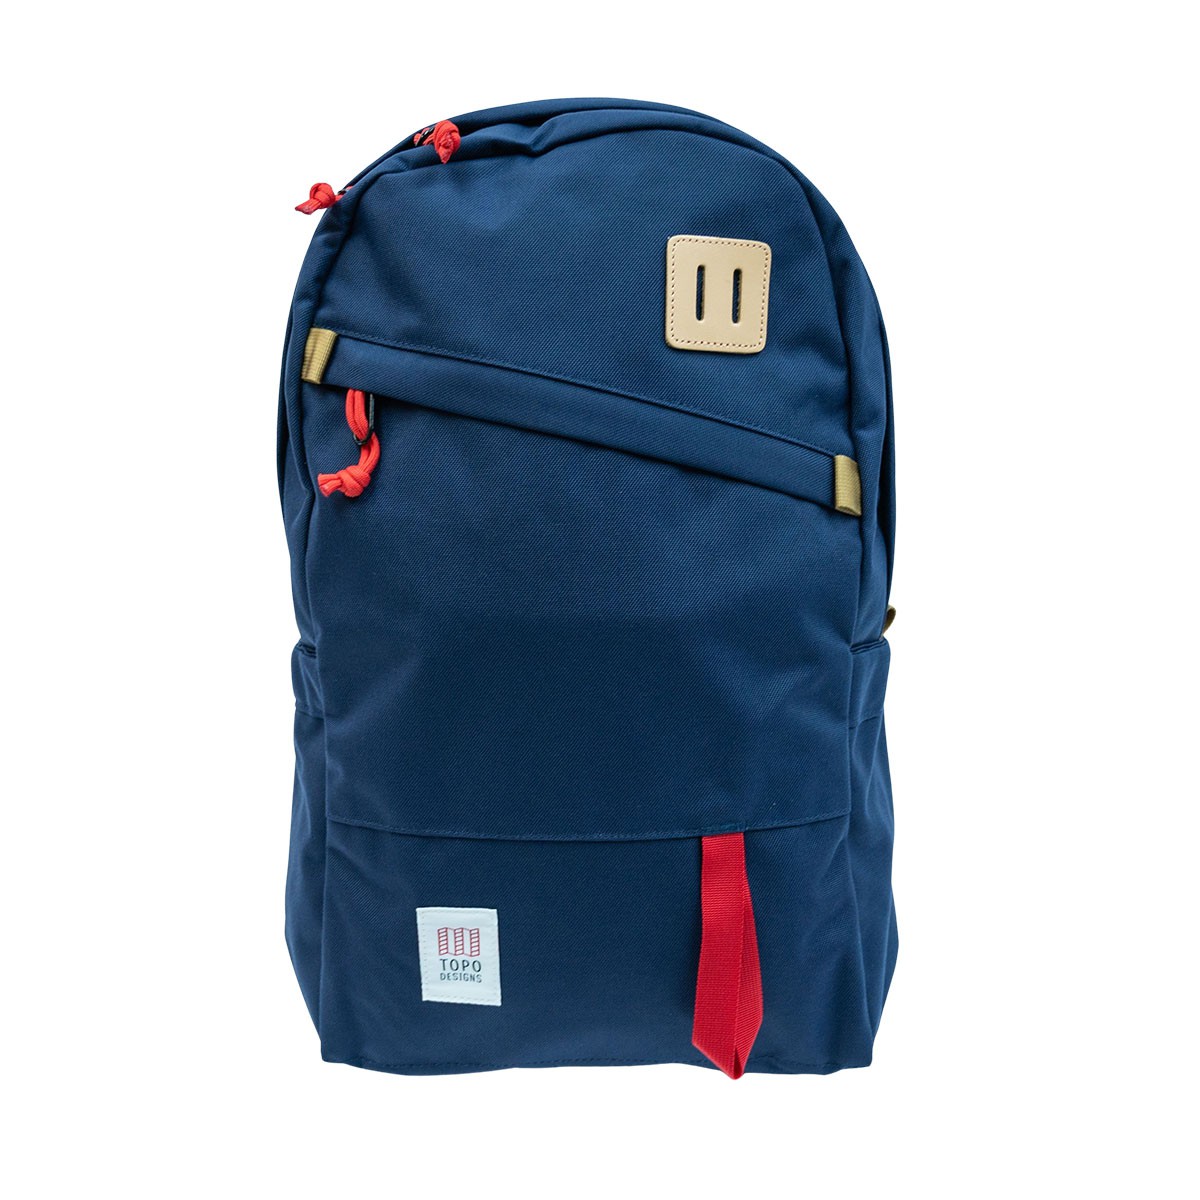 Topo Designs Daypack Backpack 背囊背包 Navy 深藍色 21.6L 可放15"手提電腦